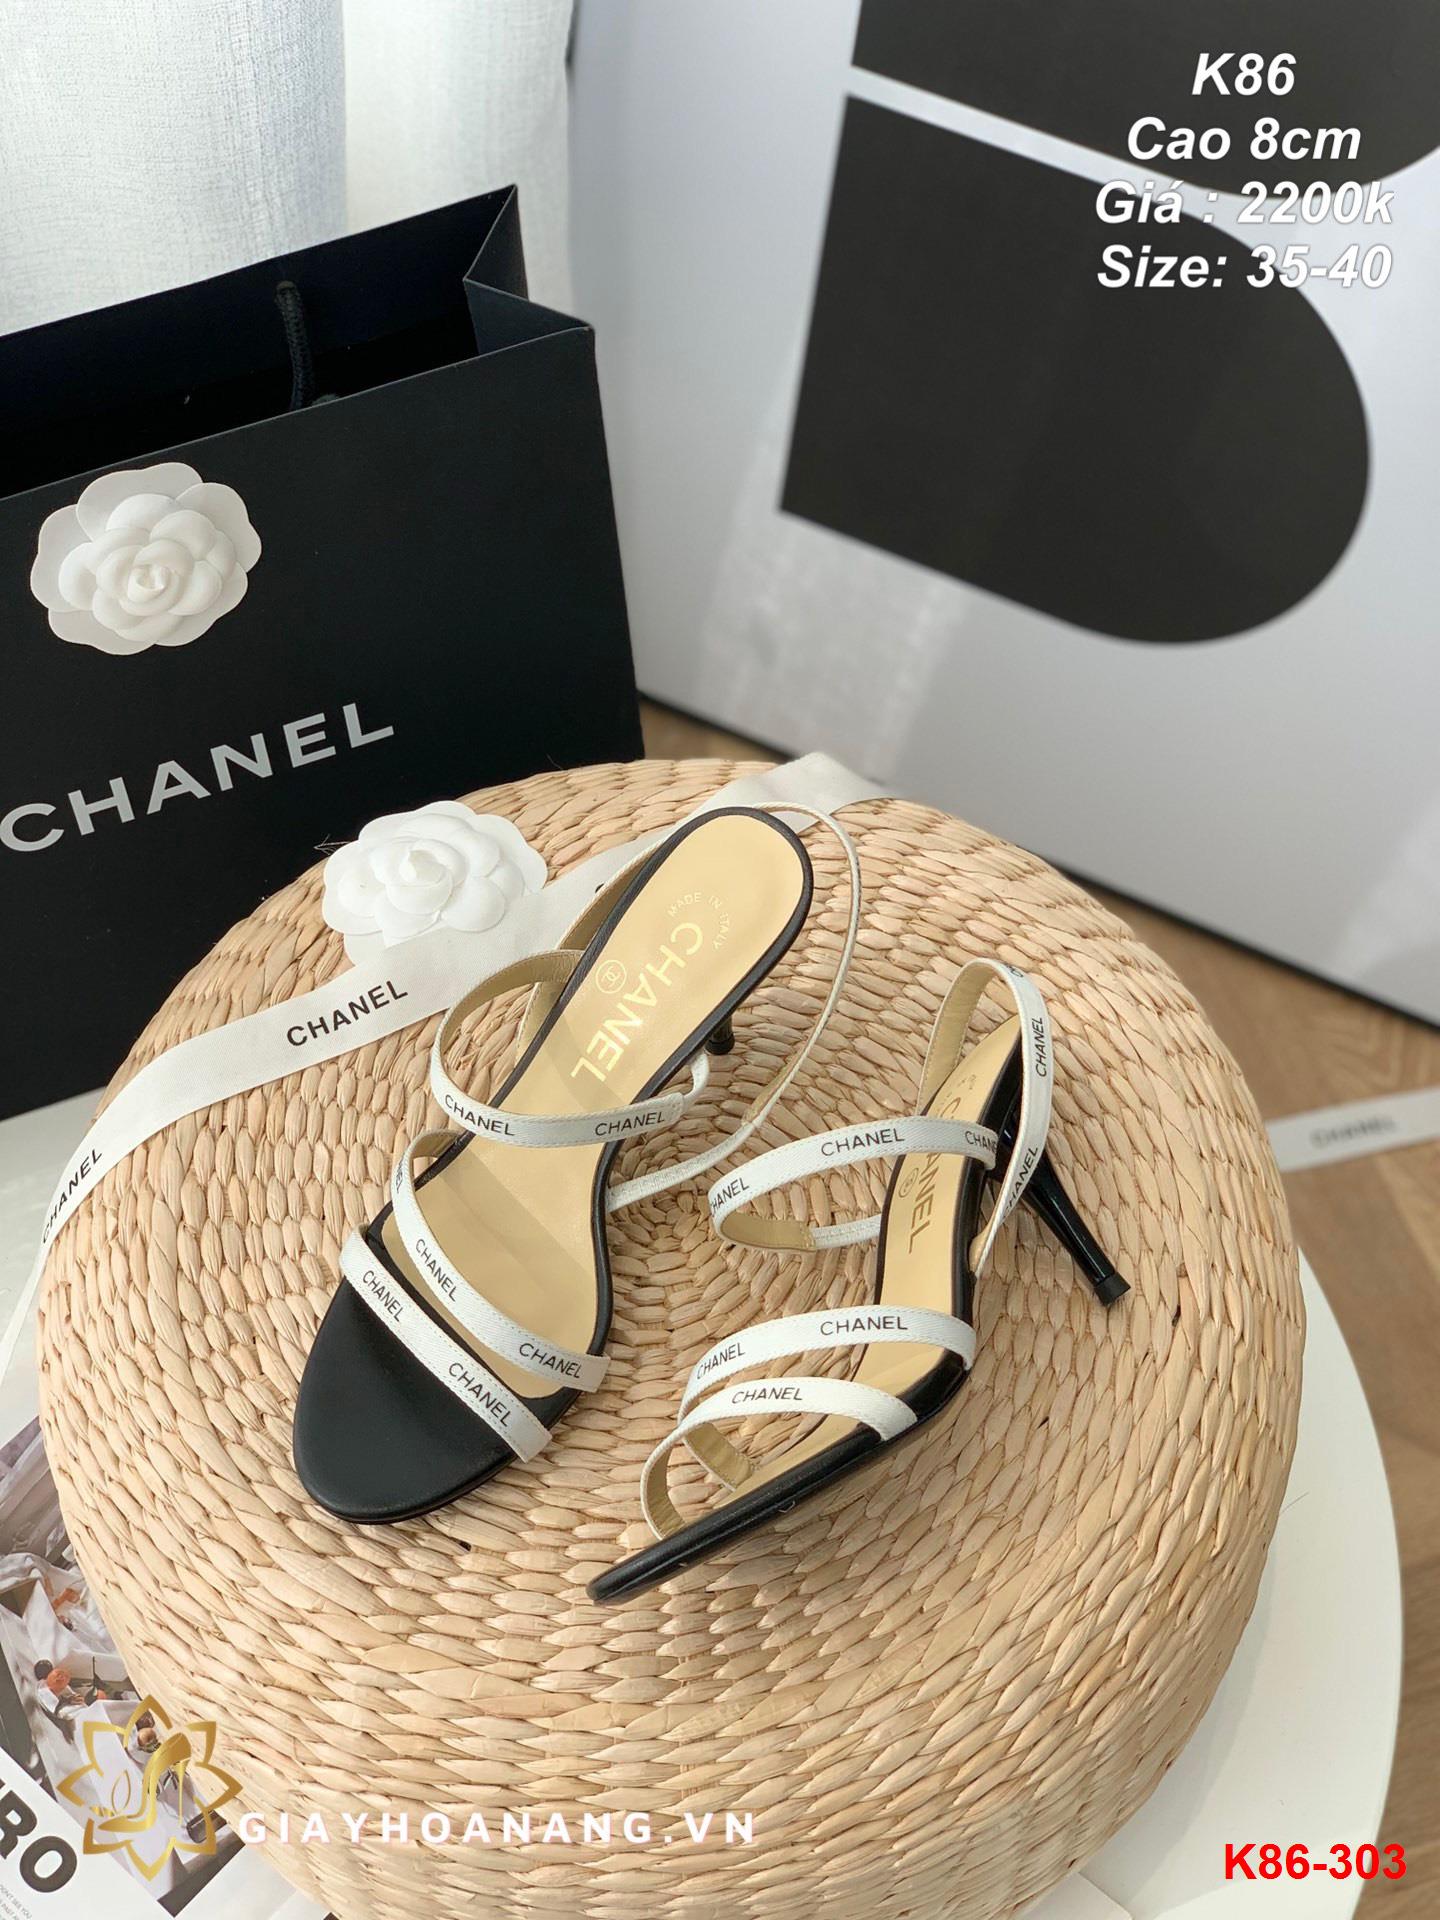 K86-303 Chanel sandal cao 8cm siêu cấp